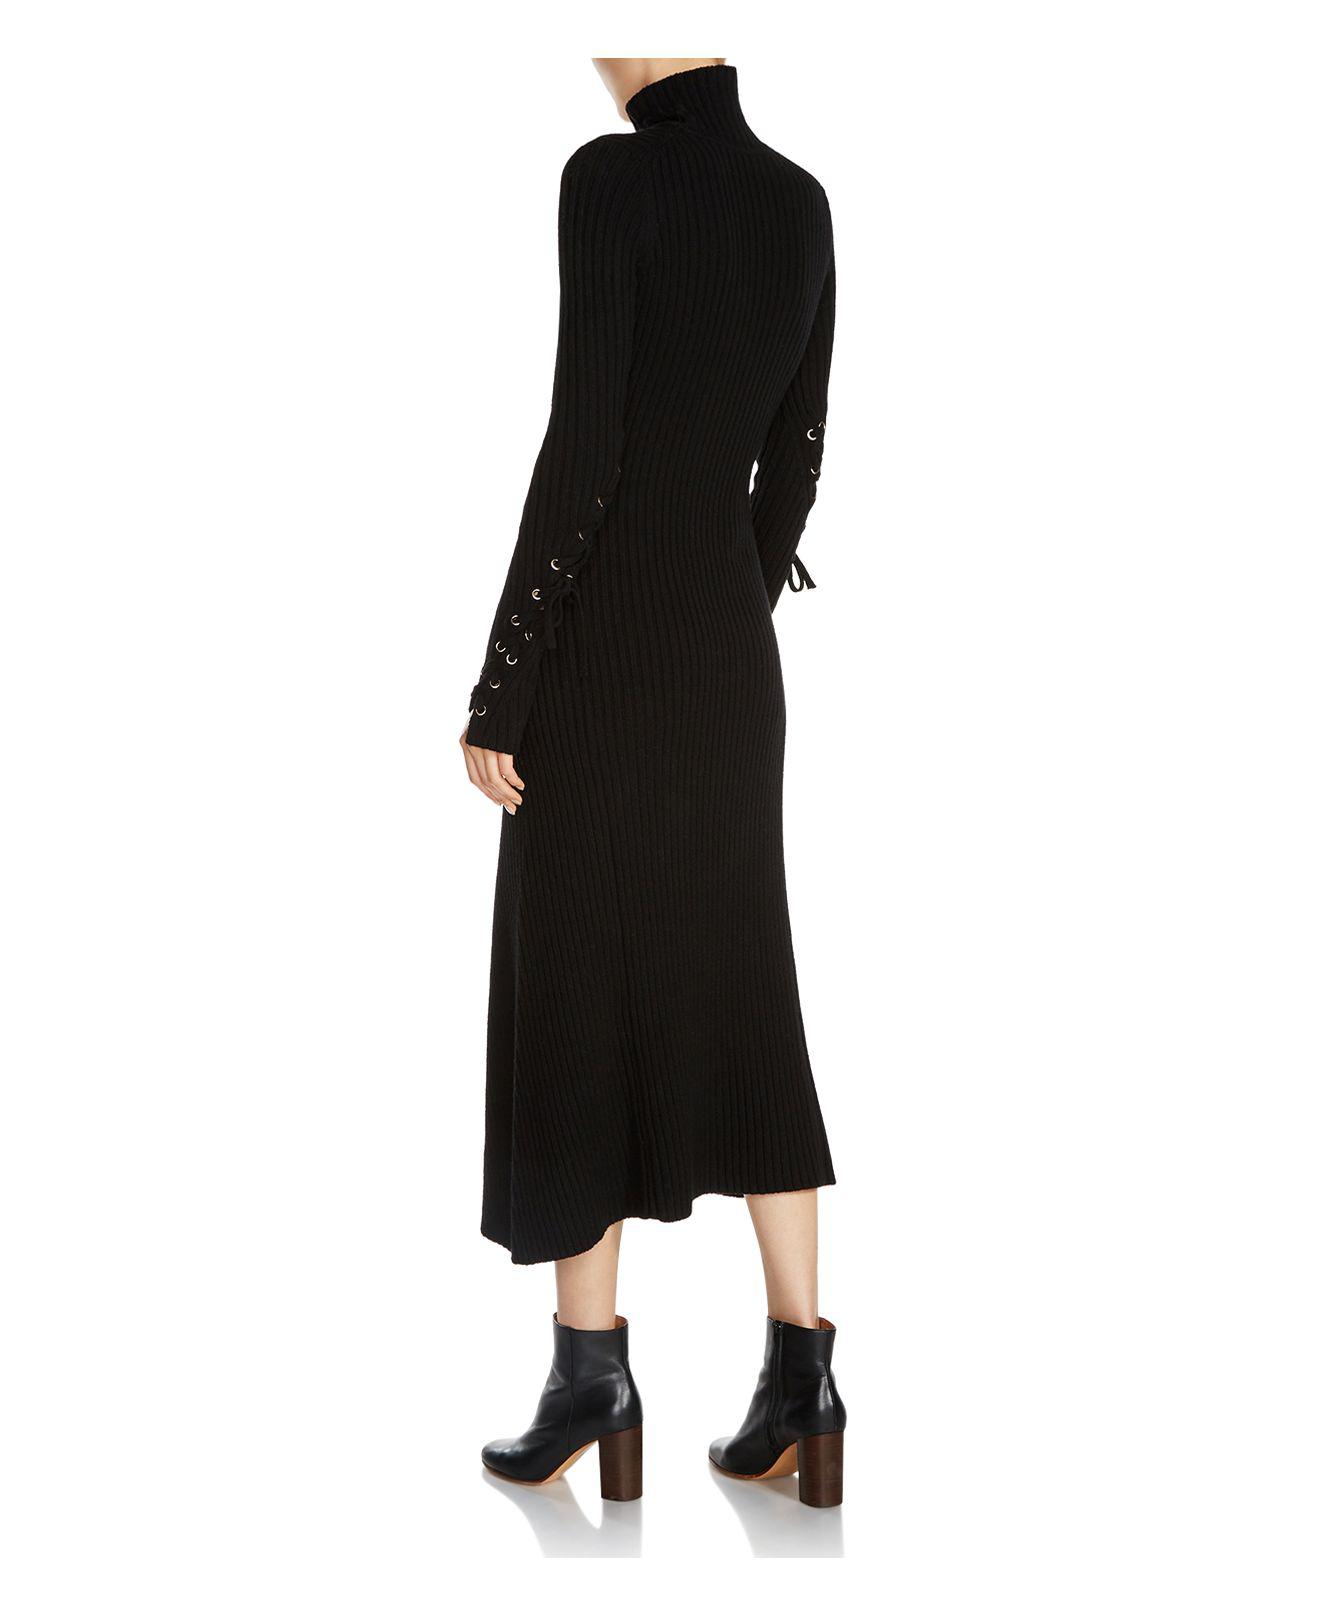 Maje Rafaela Ribbed Knit Lace-up Sleeve Midi Dress in Black - Lyst